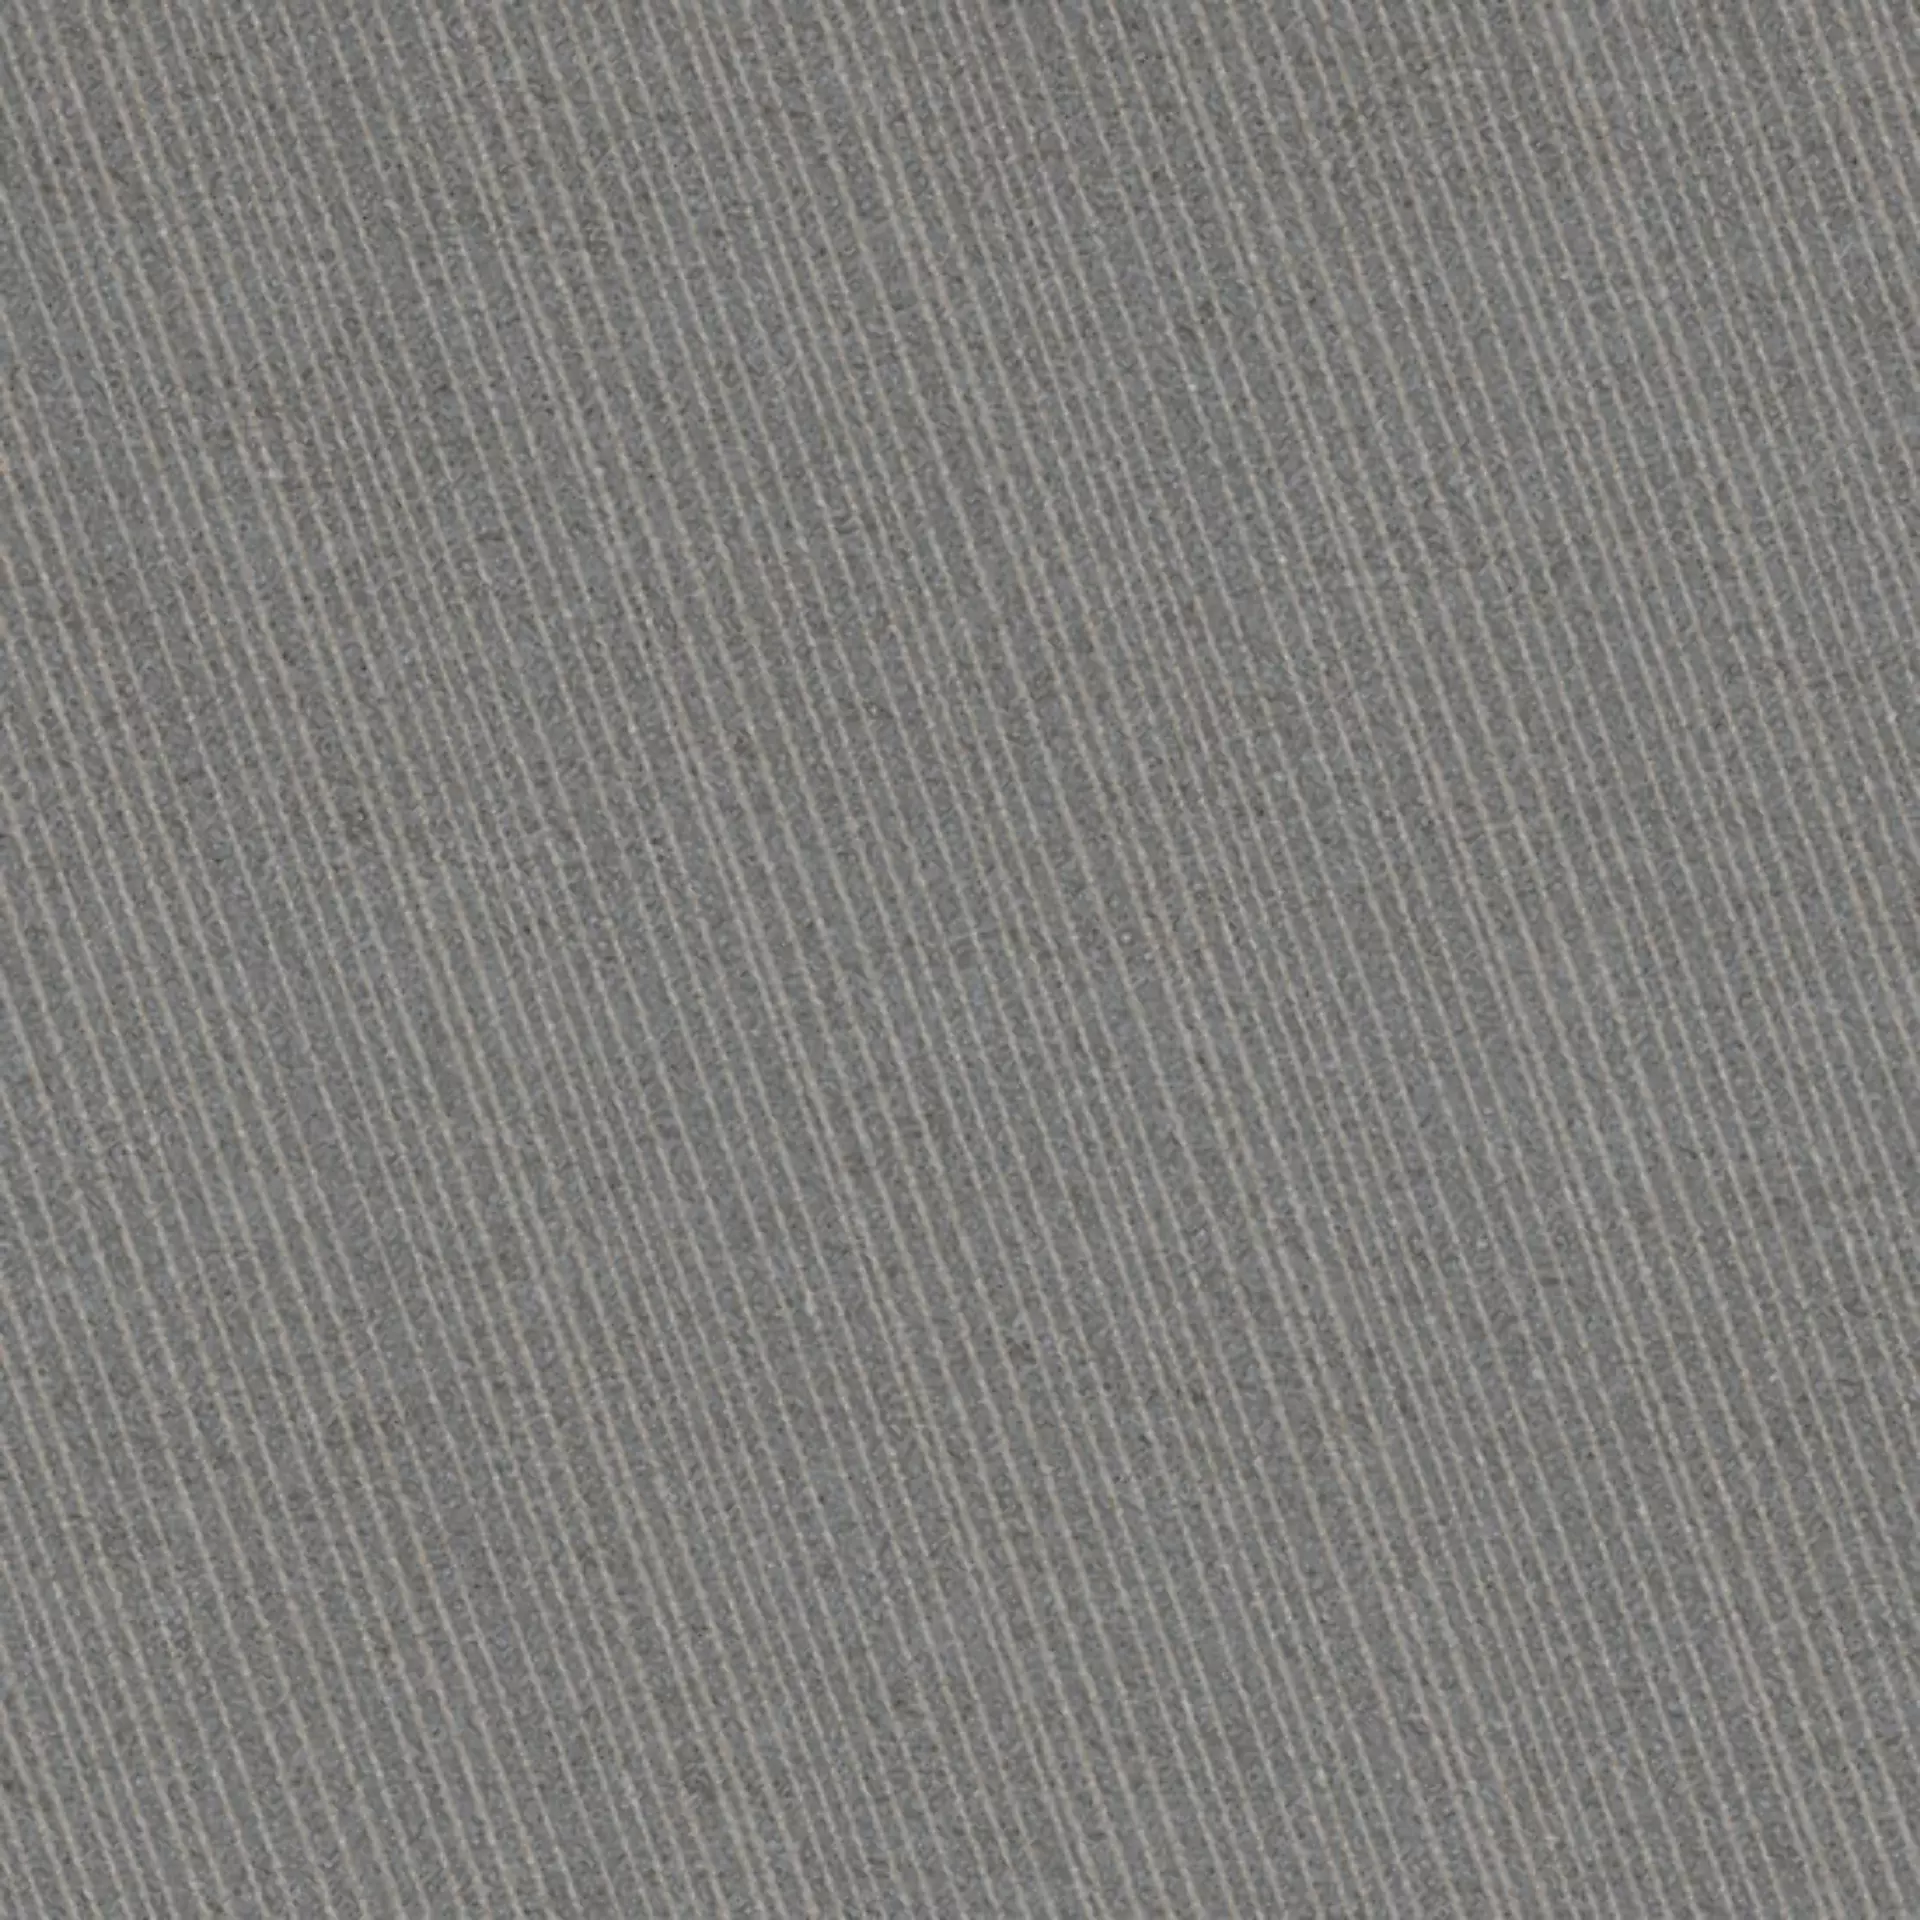 Coem Tweed Stone Graphite Naturale 0TW600R 60x60cm rectified 10mm